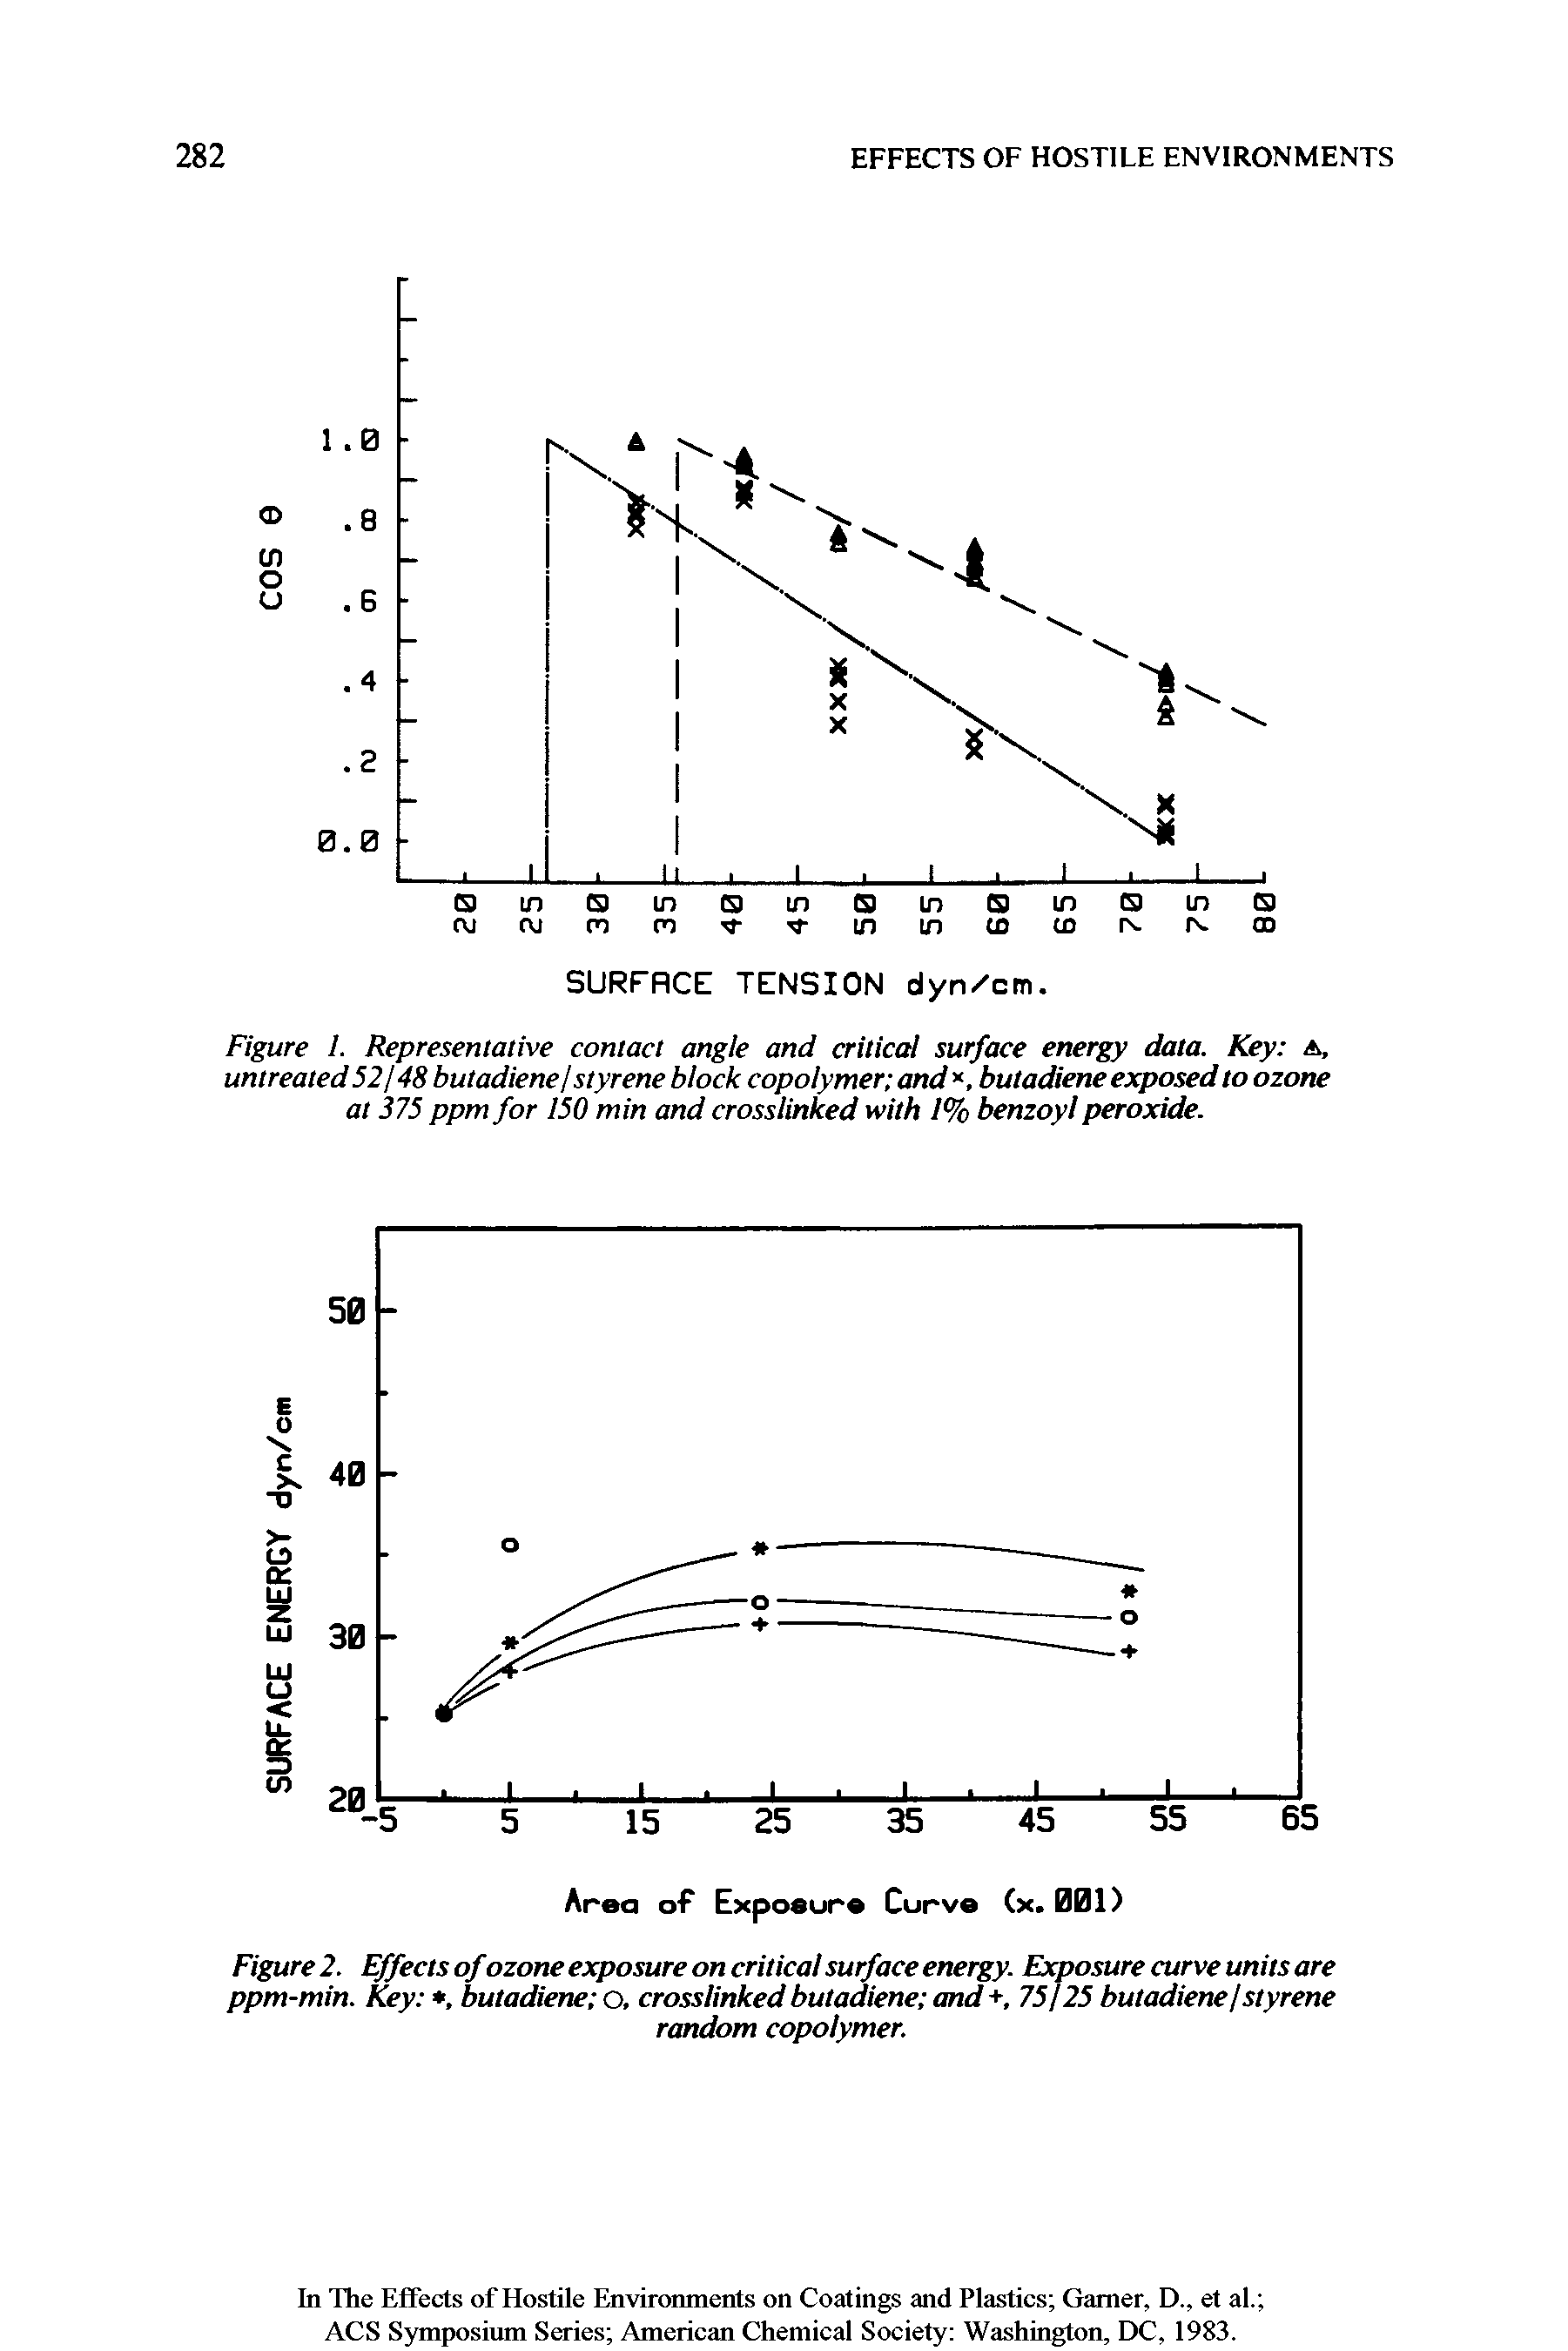 Figure 2. Effects of ozone exposure on critical surface energy. Exposure curve units are ppm-min. Key , butadiene o, crosslinked butadiene and+, 75/25 butadiene/styrene random copolymer.